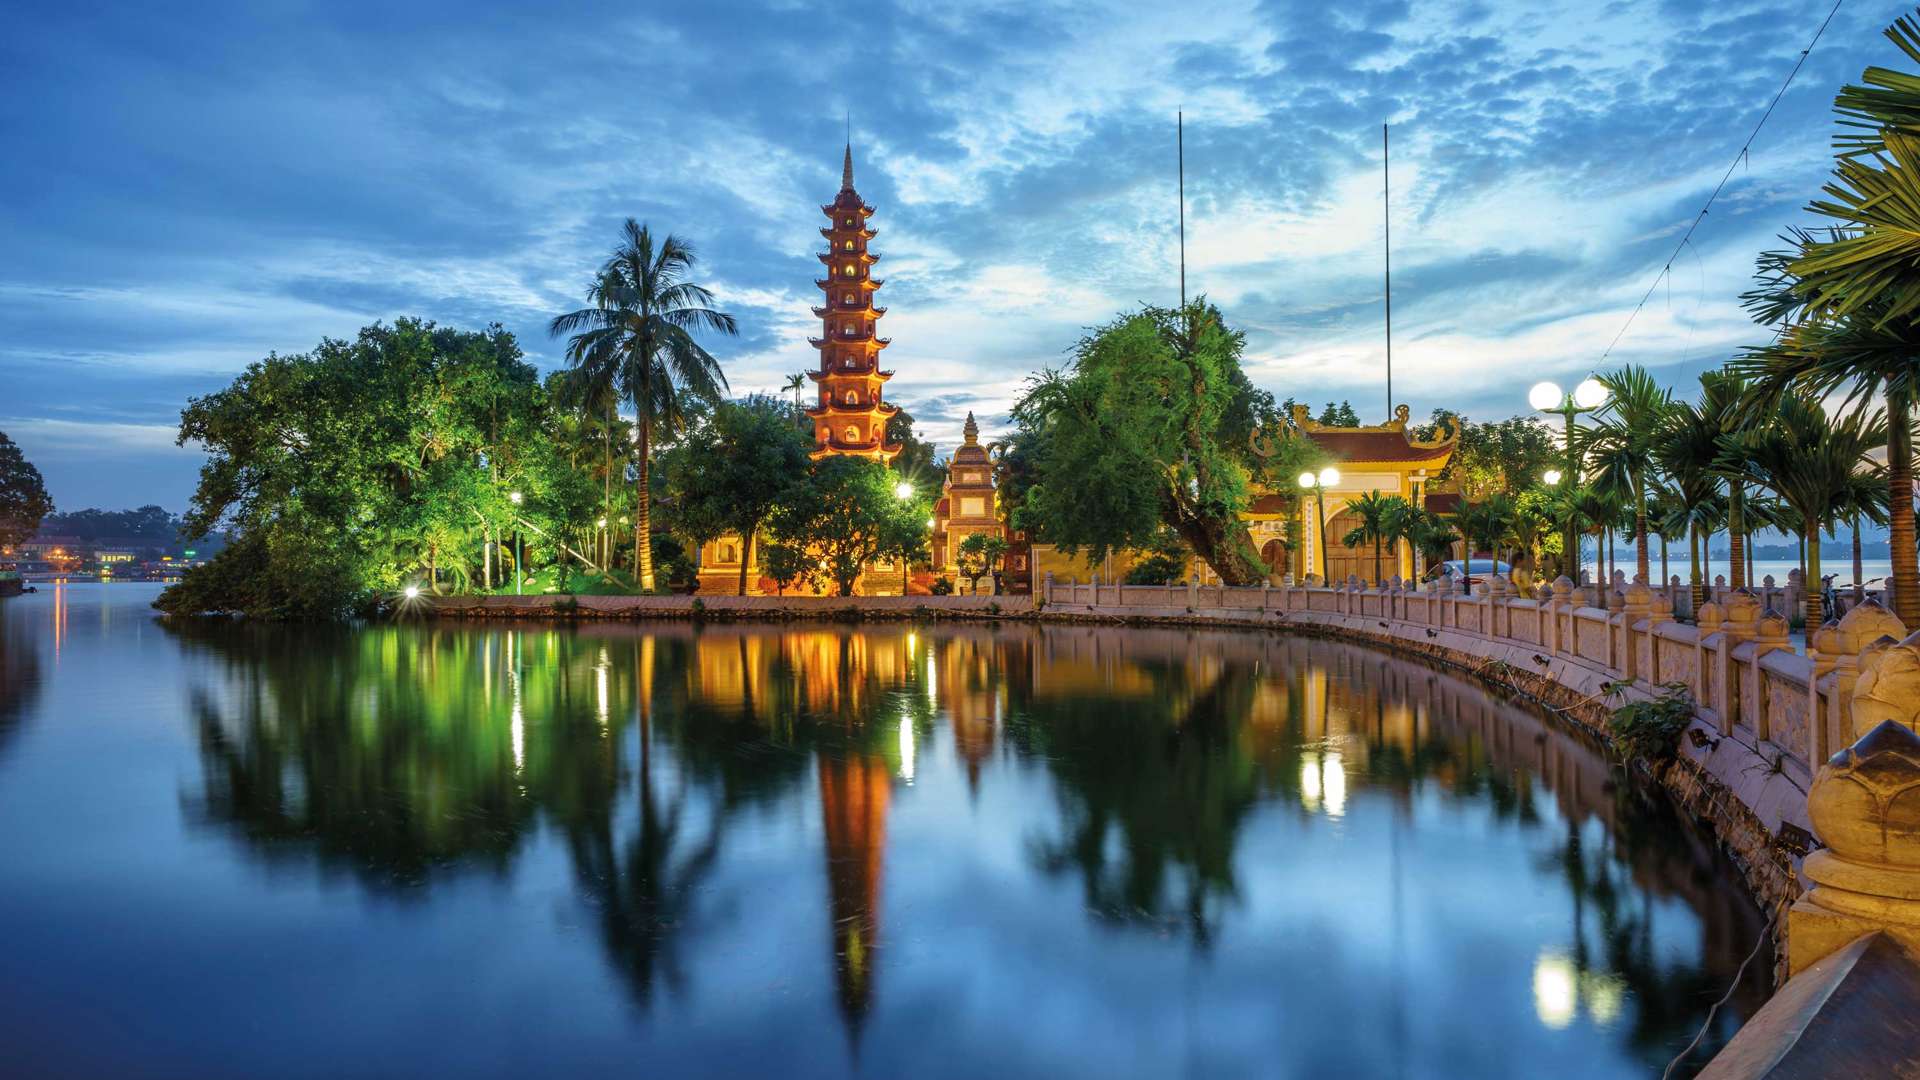 Tran Quoc Pagoda The Oldest Temple In Hanoi, Vietnam